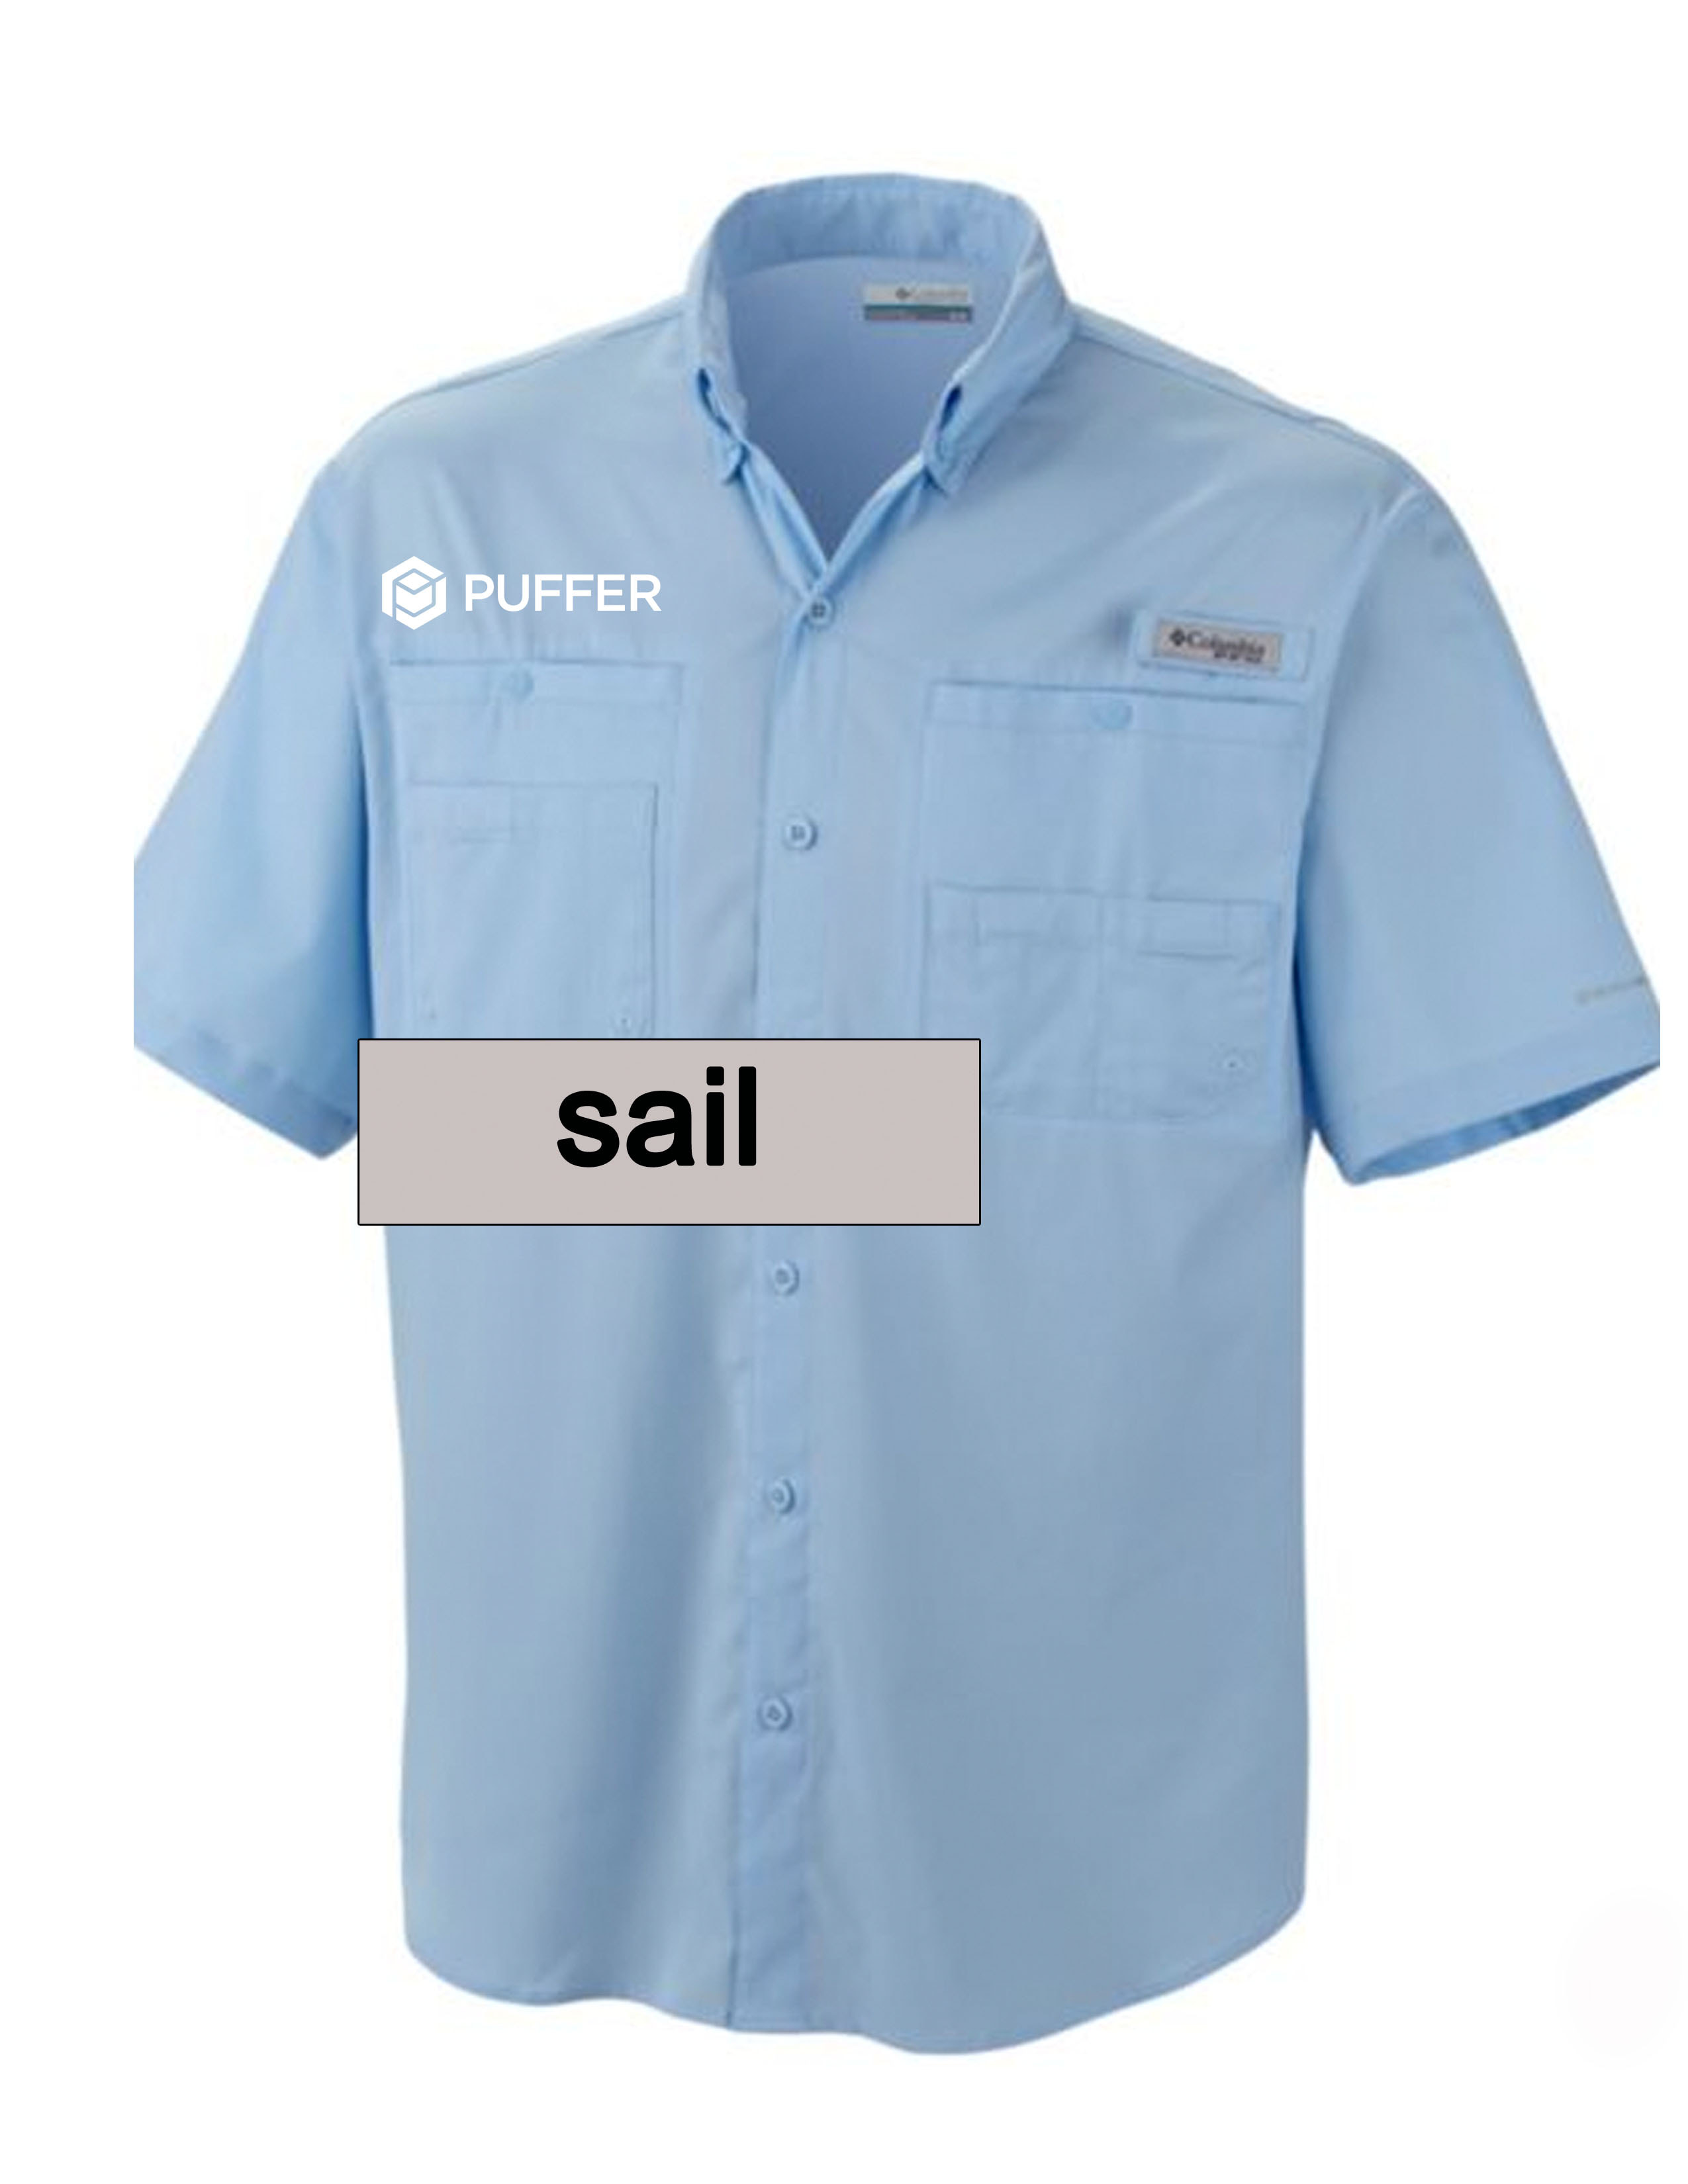 SAIL Columbia PFG fishing shirt (short sleeve with Puffer logo)